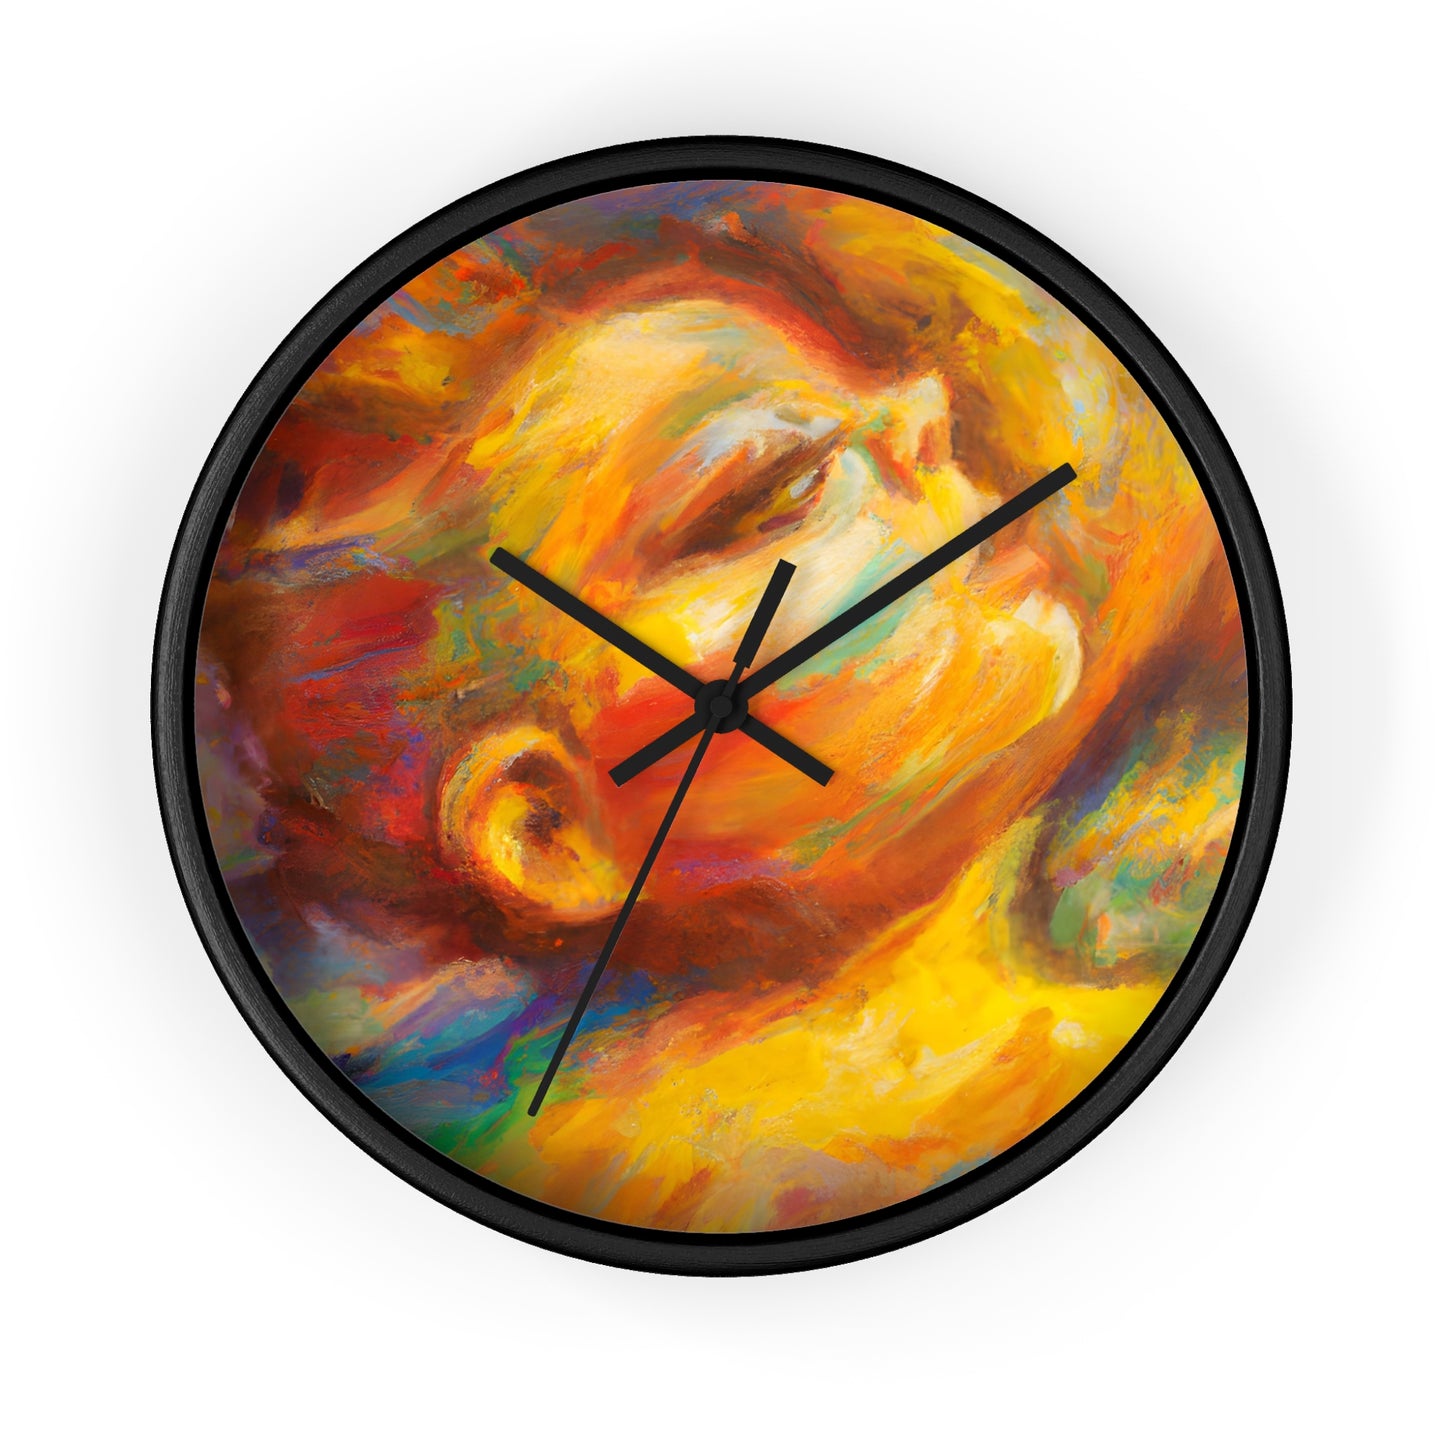 Chiarafresca - Autism-Inspired Wall Clock